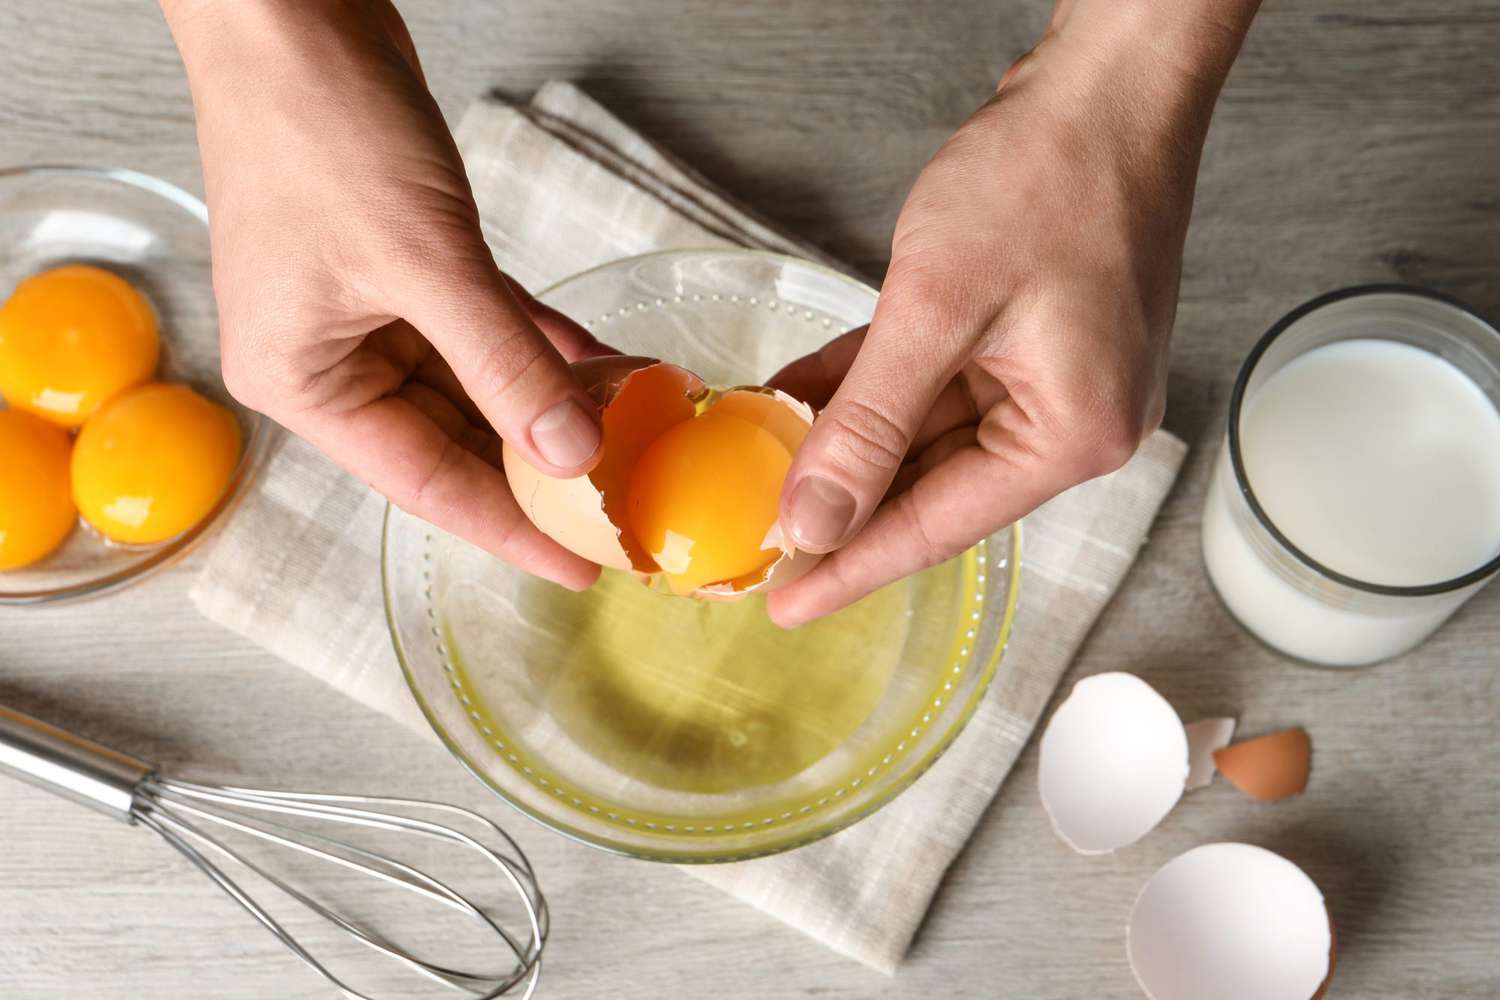 Woman separating egg yolk from white over glass bowl